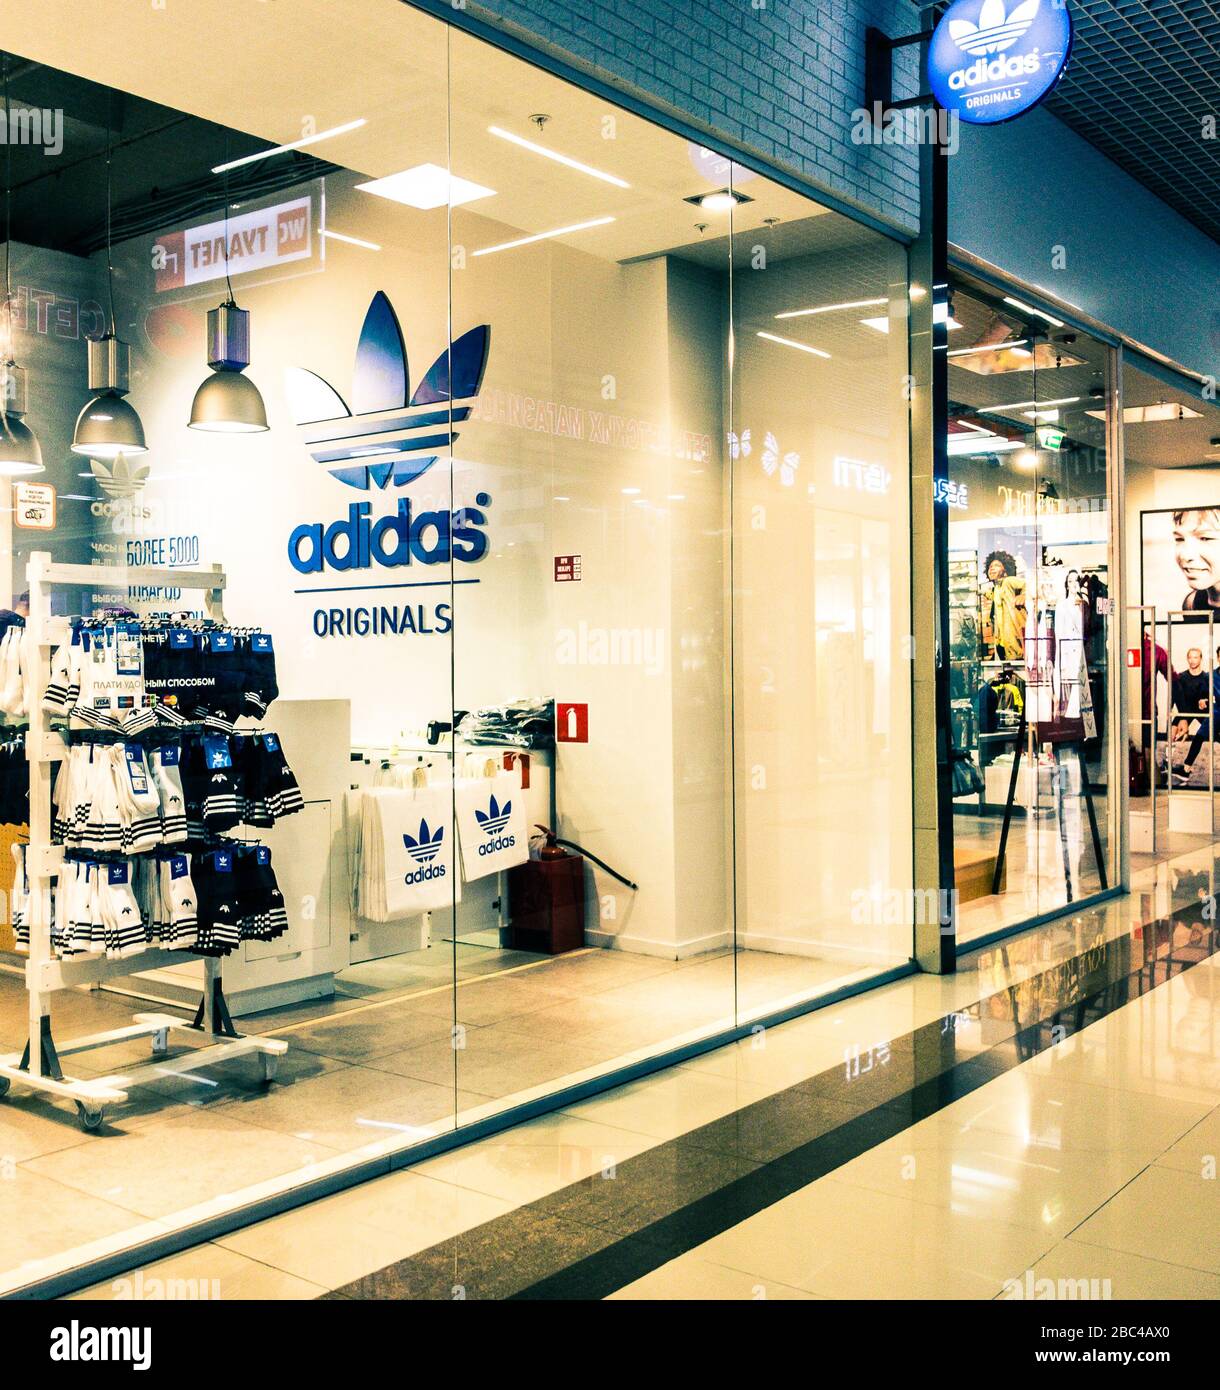 2020: the Adidas Originals boutique storefront Stock Photo - Alamy